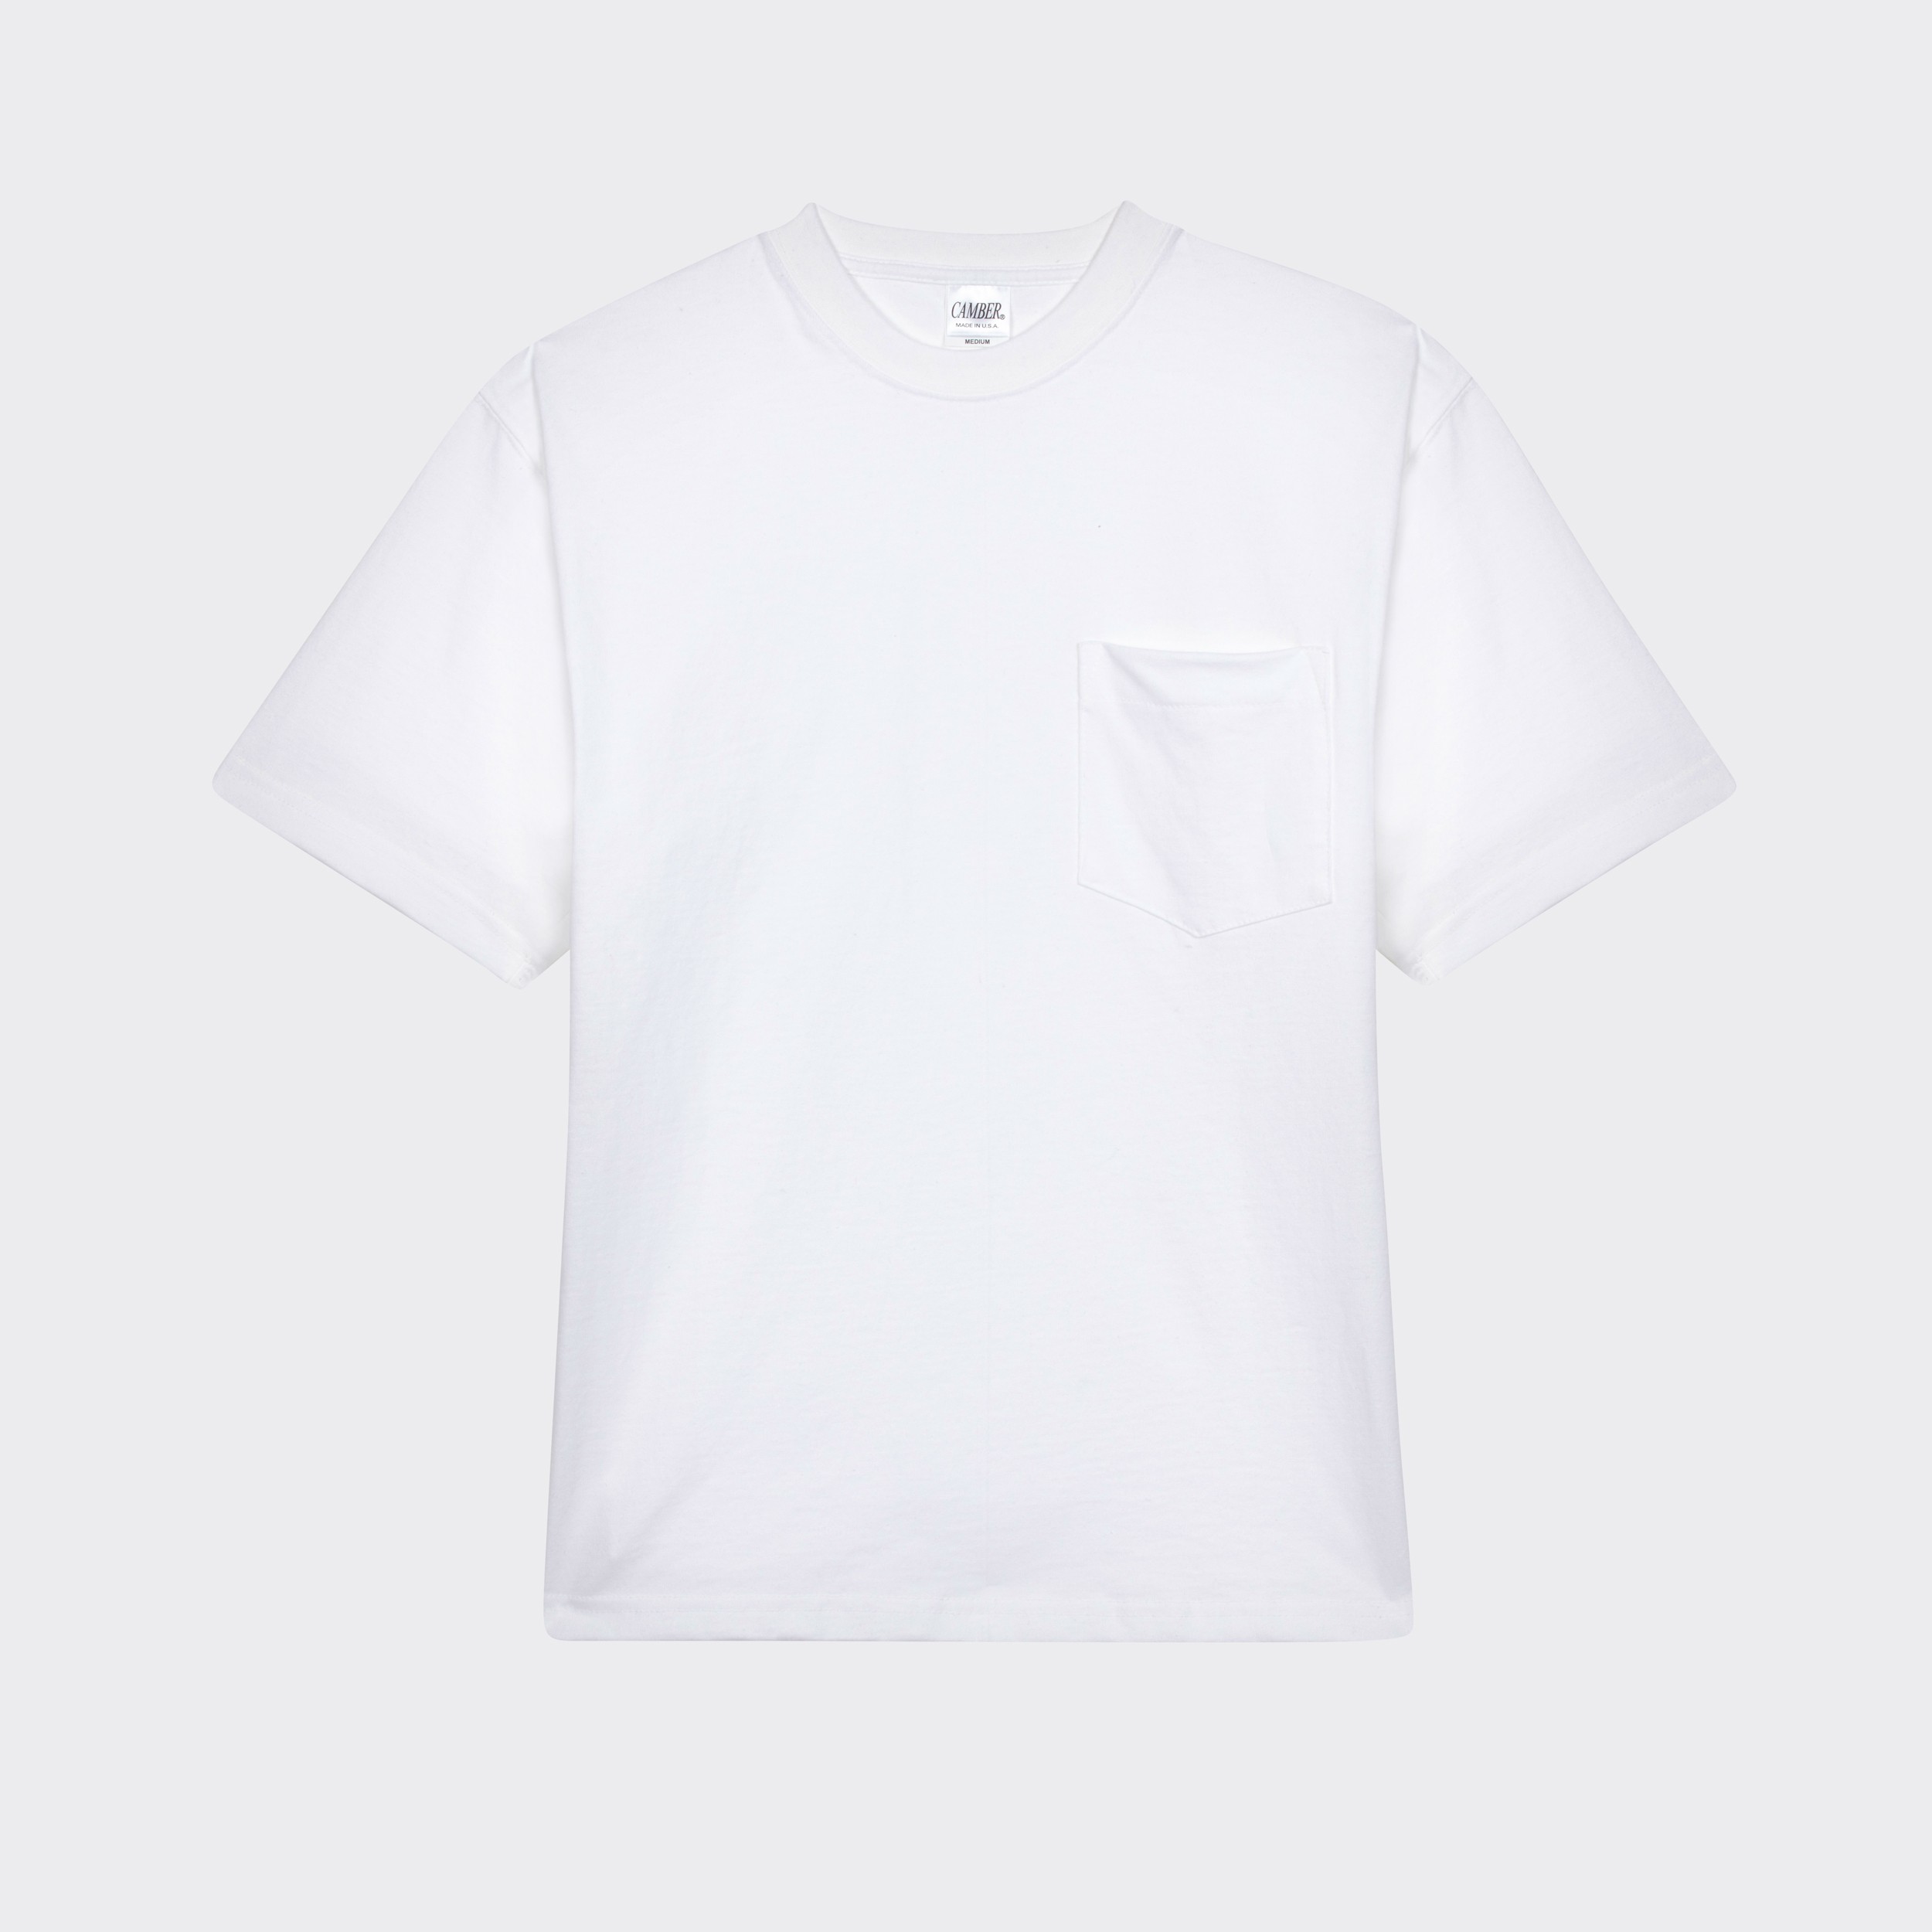 Camber USA : Pocket T-shirt : White